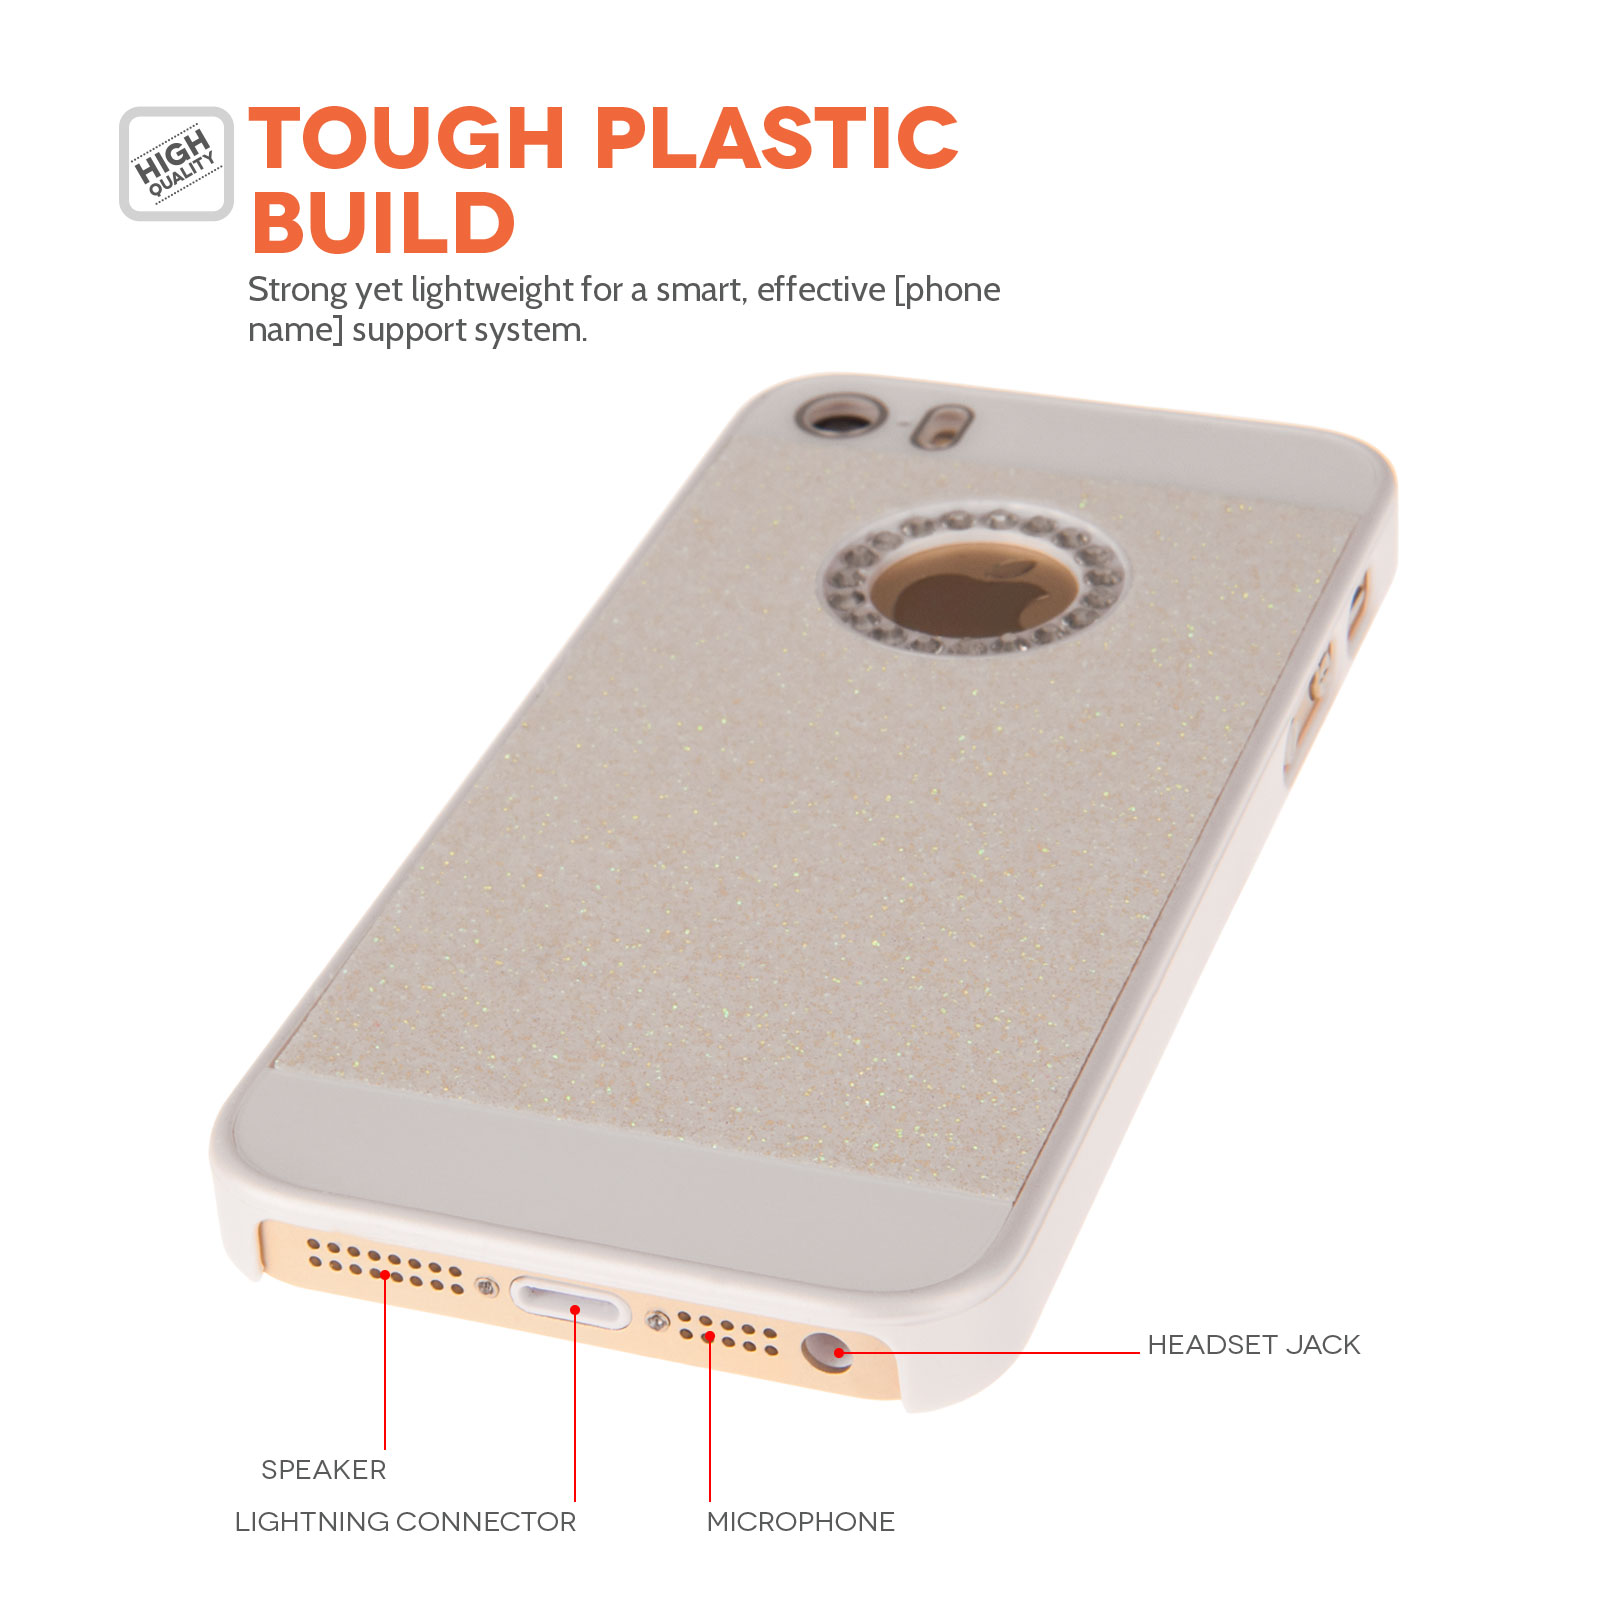 Yousave Accessories iPhone SE Flash Diamond Case - White